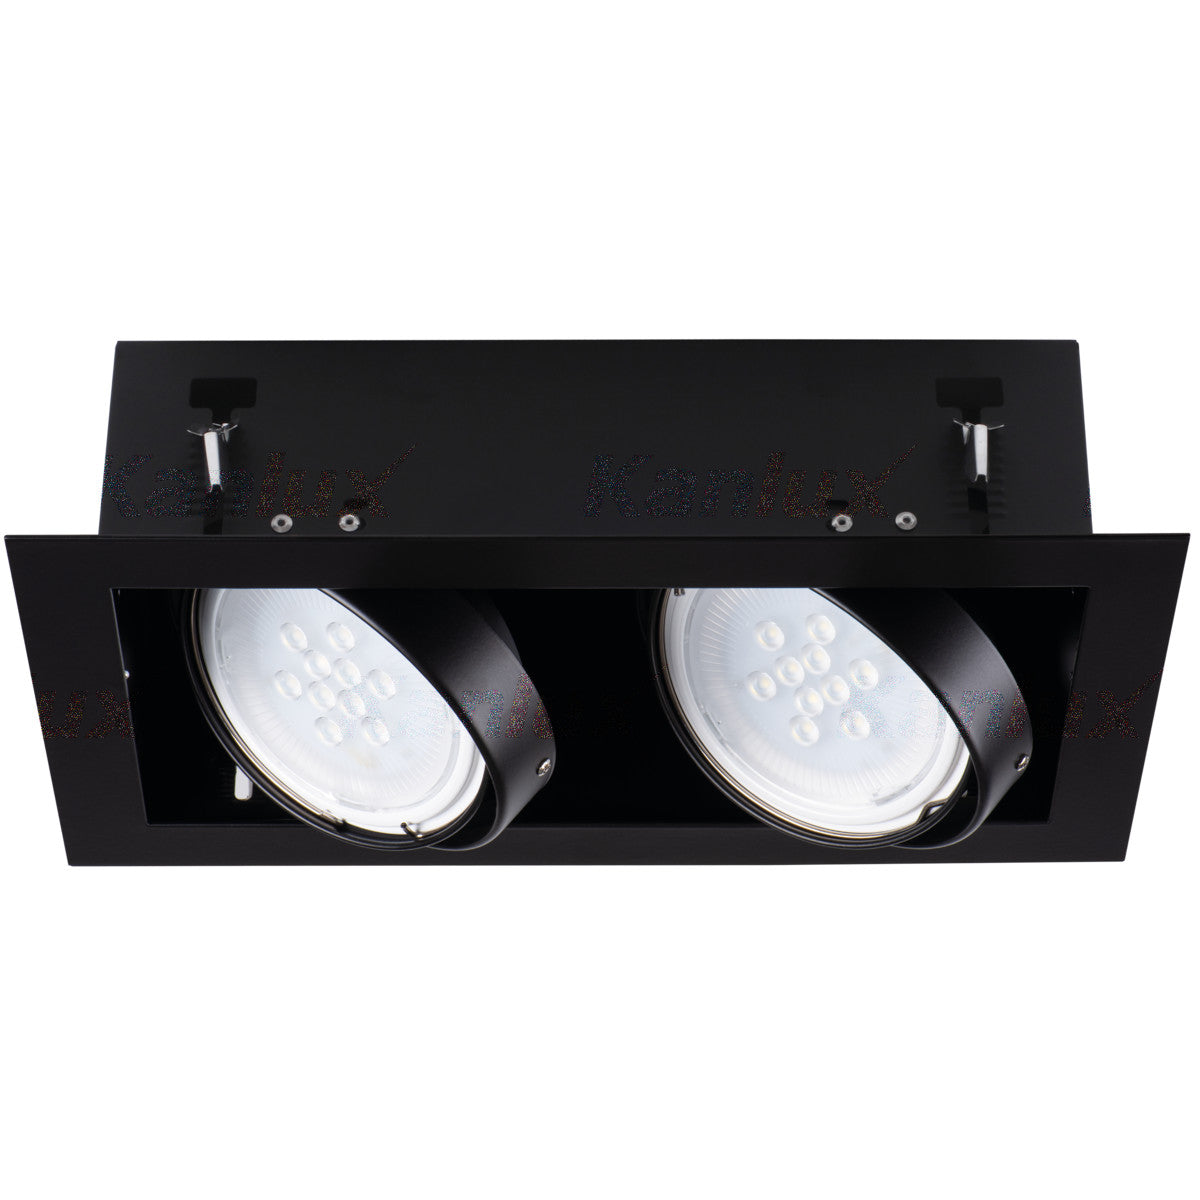 Kanlux MATEO Premium Adjustable Commercial Recessed GU10 LED Downlight Retail Box Spotlight